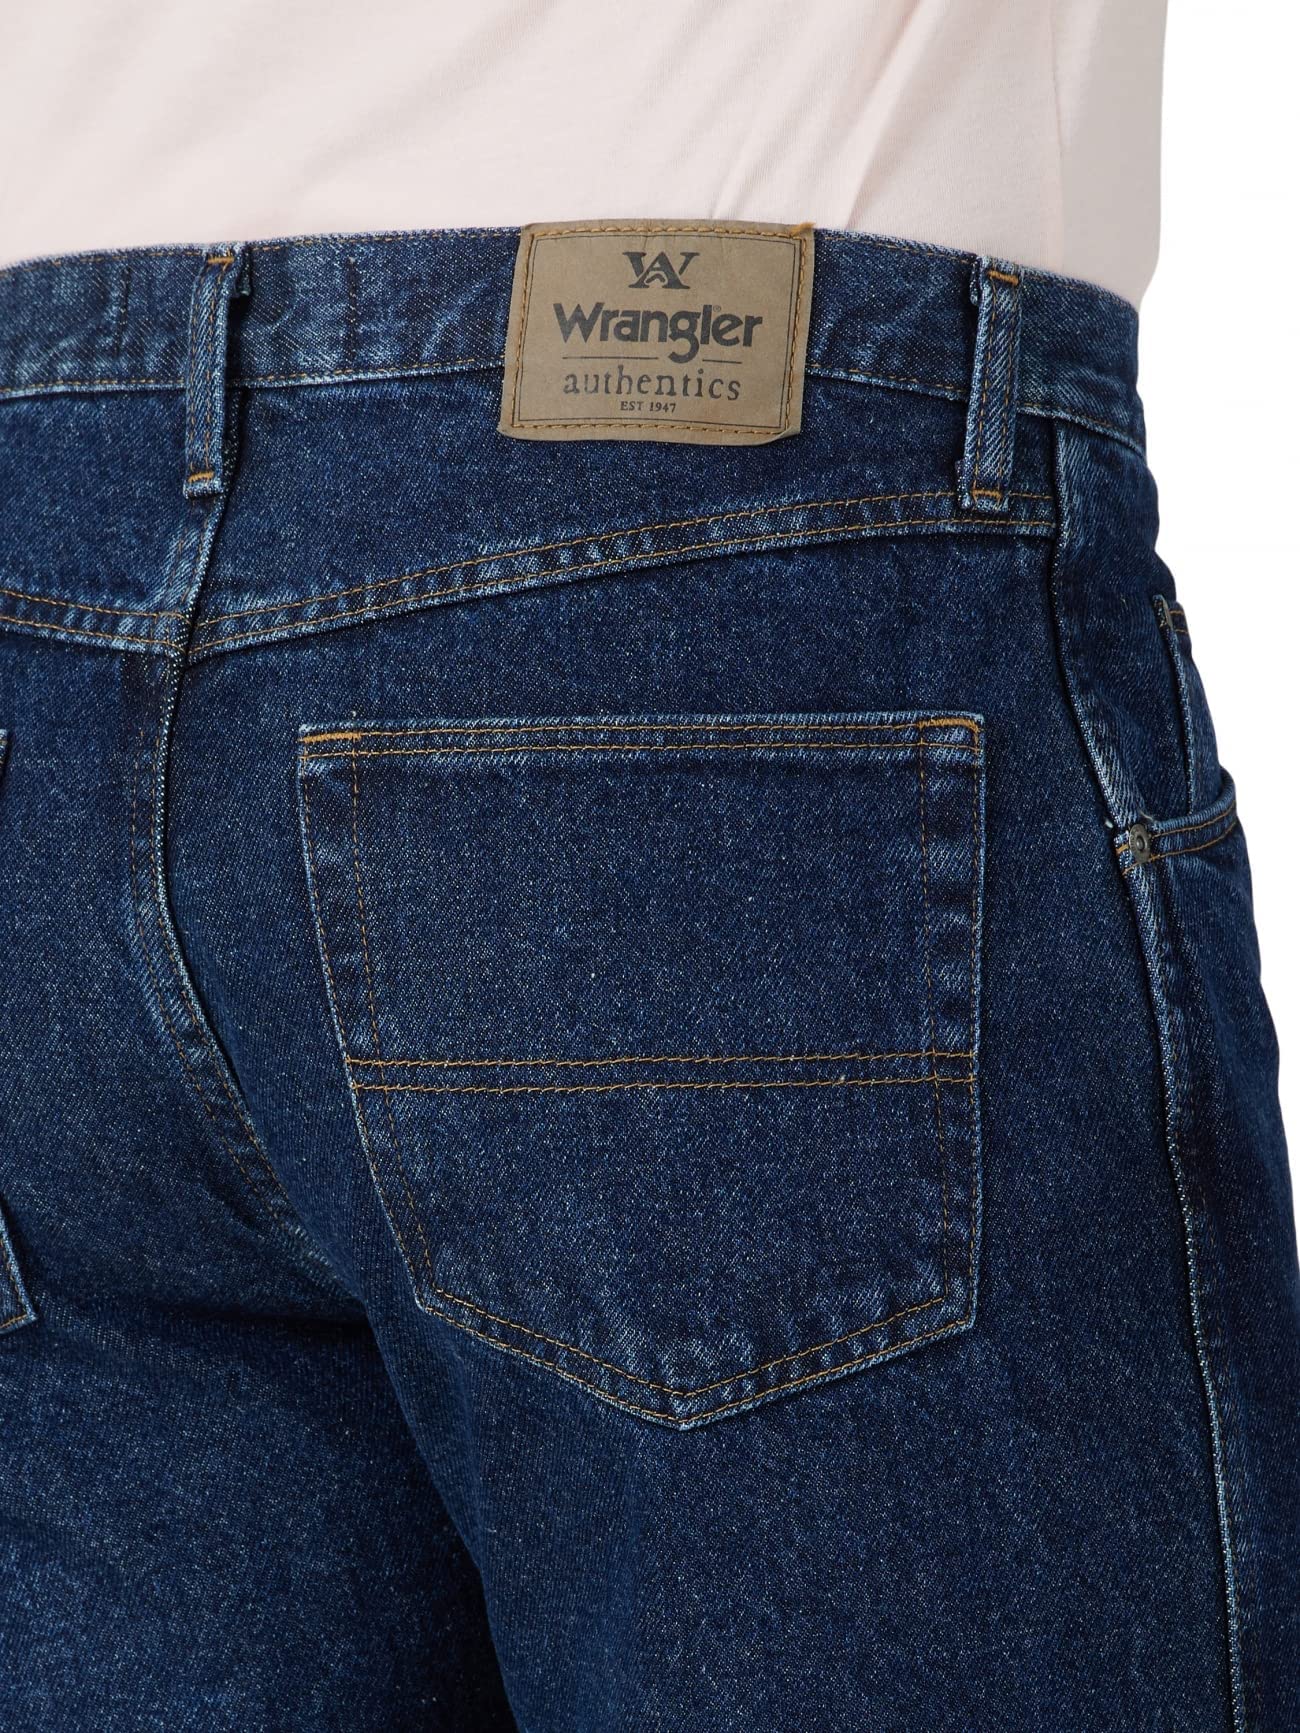 Wrangler Authentics Men's Classic 5-Pocket Regular Fit Cotton Jean, Dark Rinse, 38W x 34L